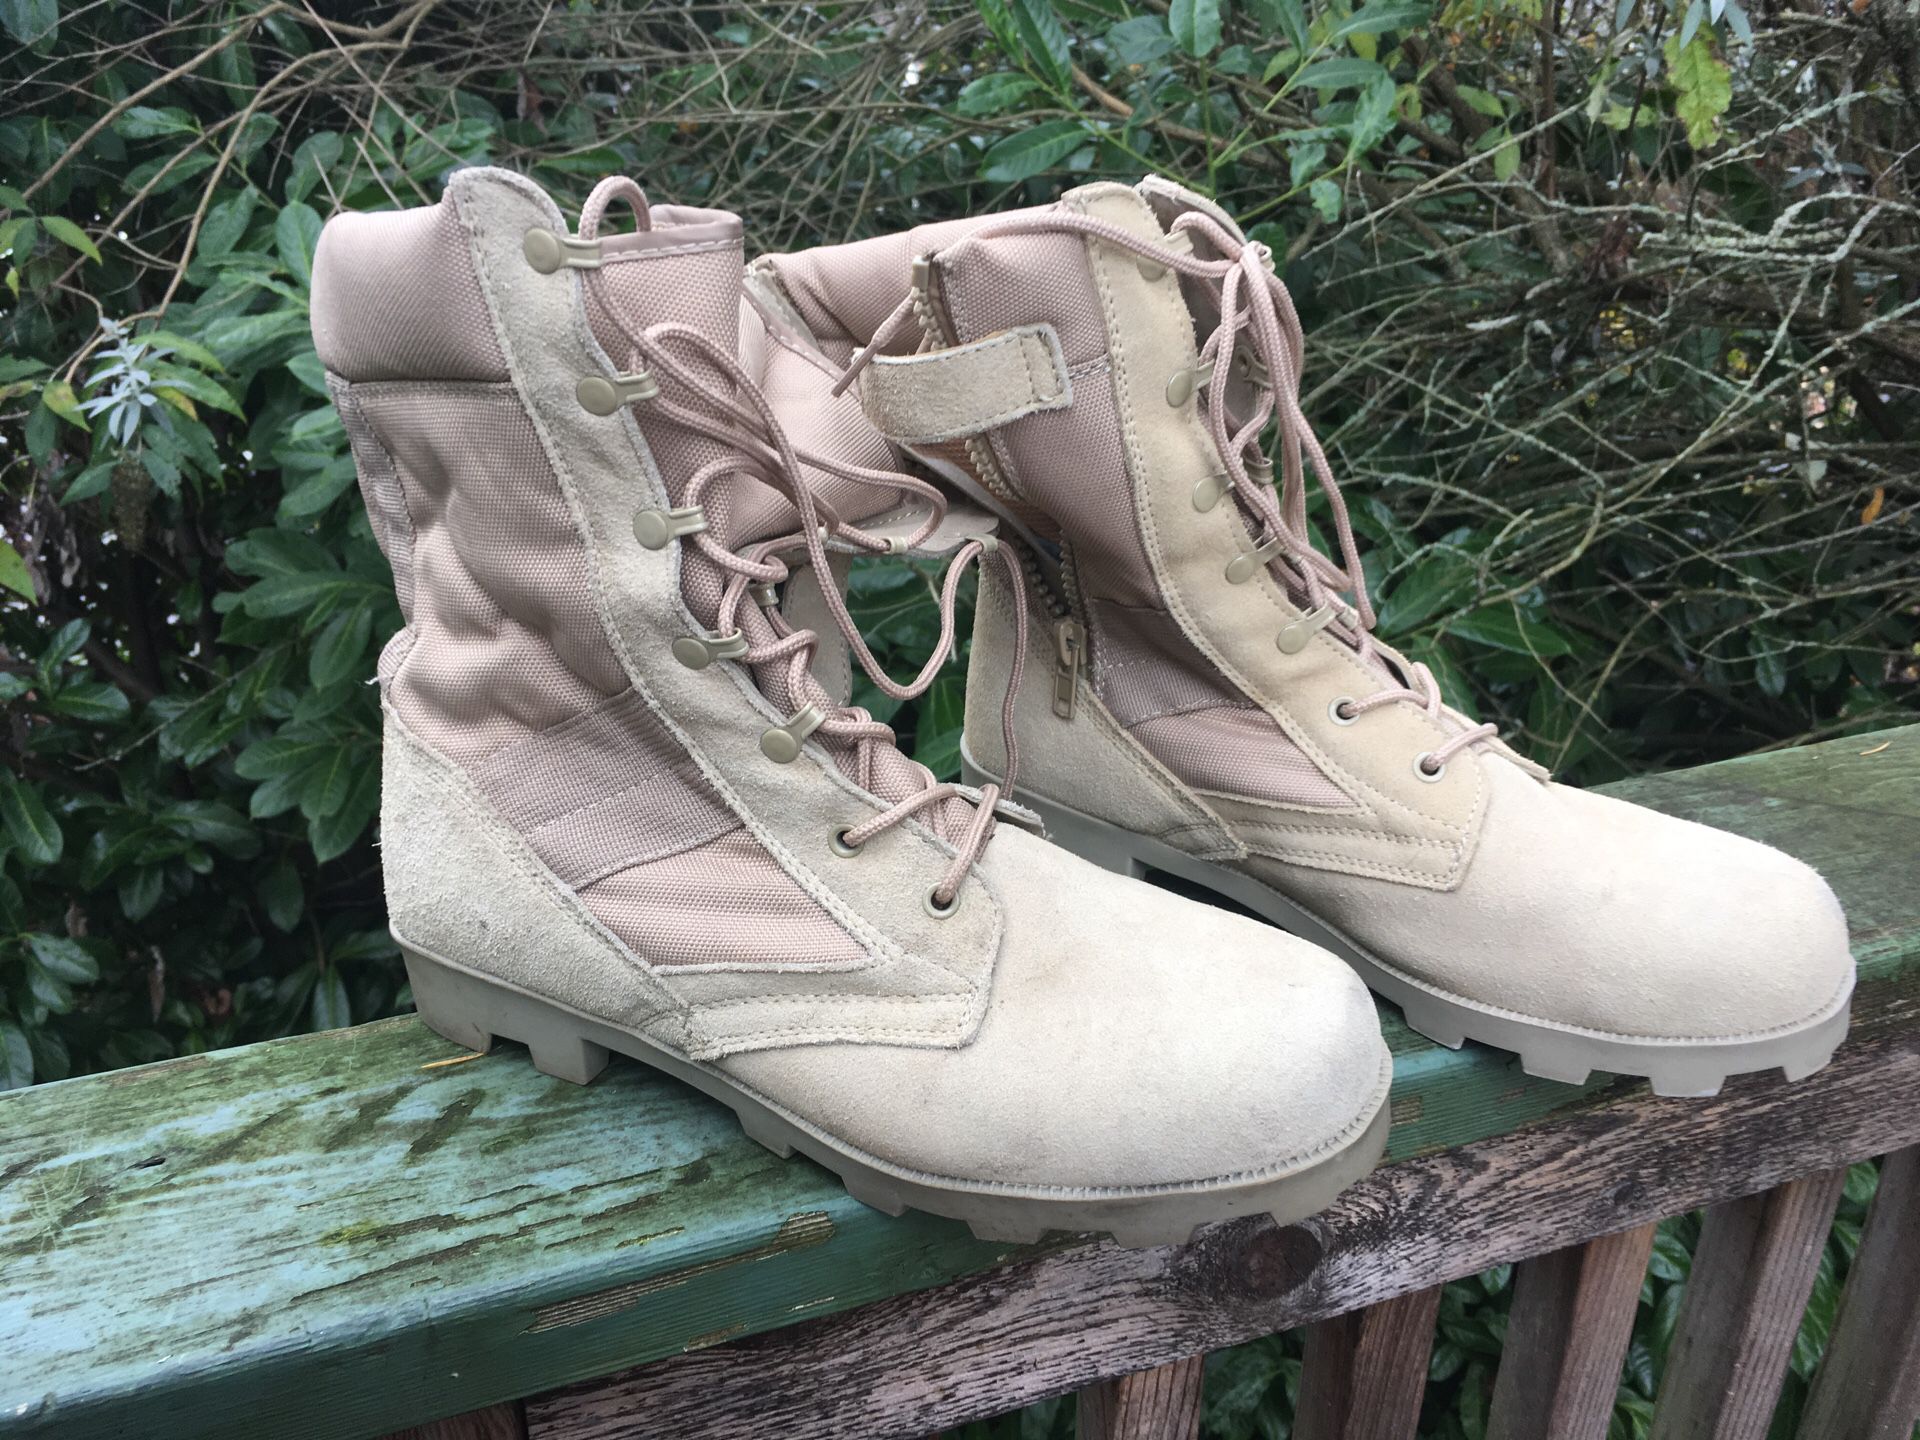 Maelstrom Combat boots size 47 aka men's 13